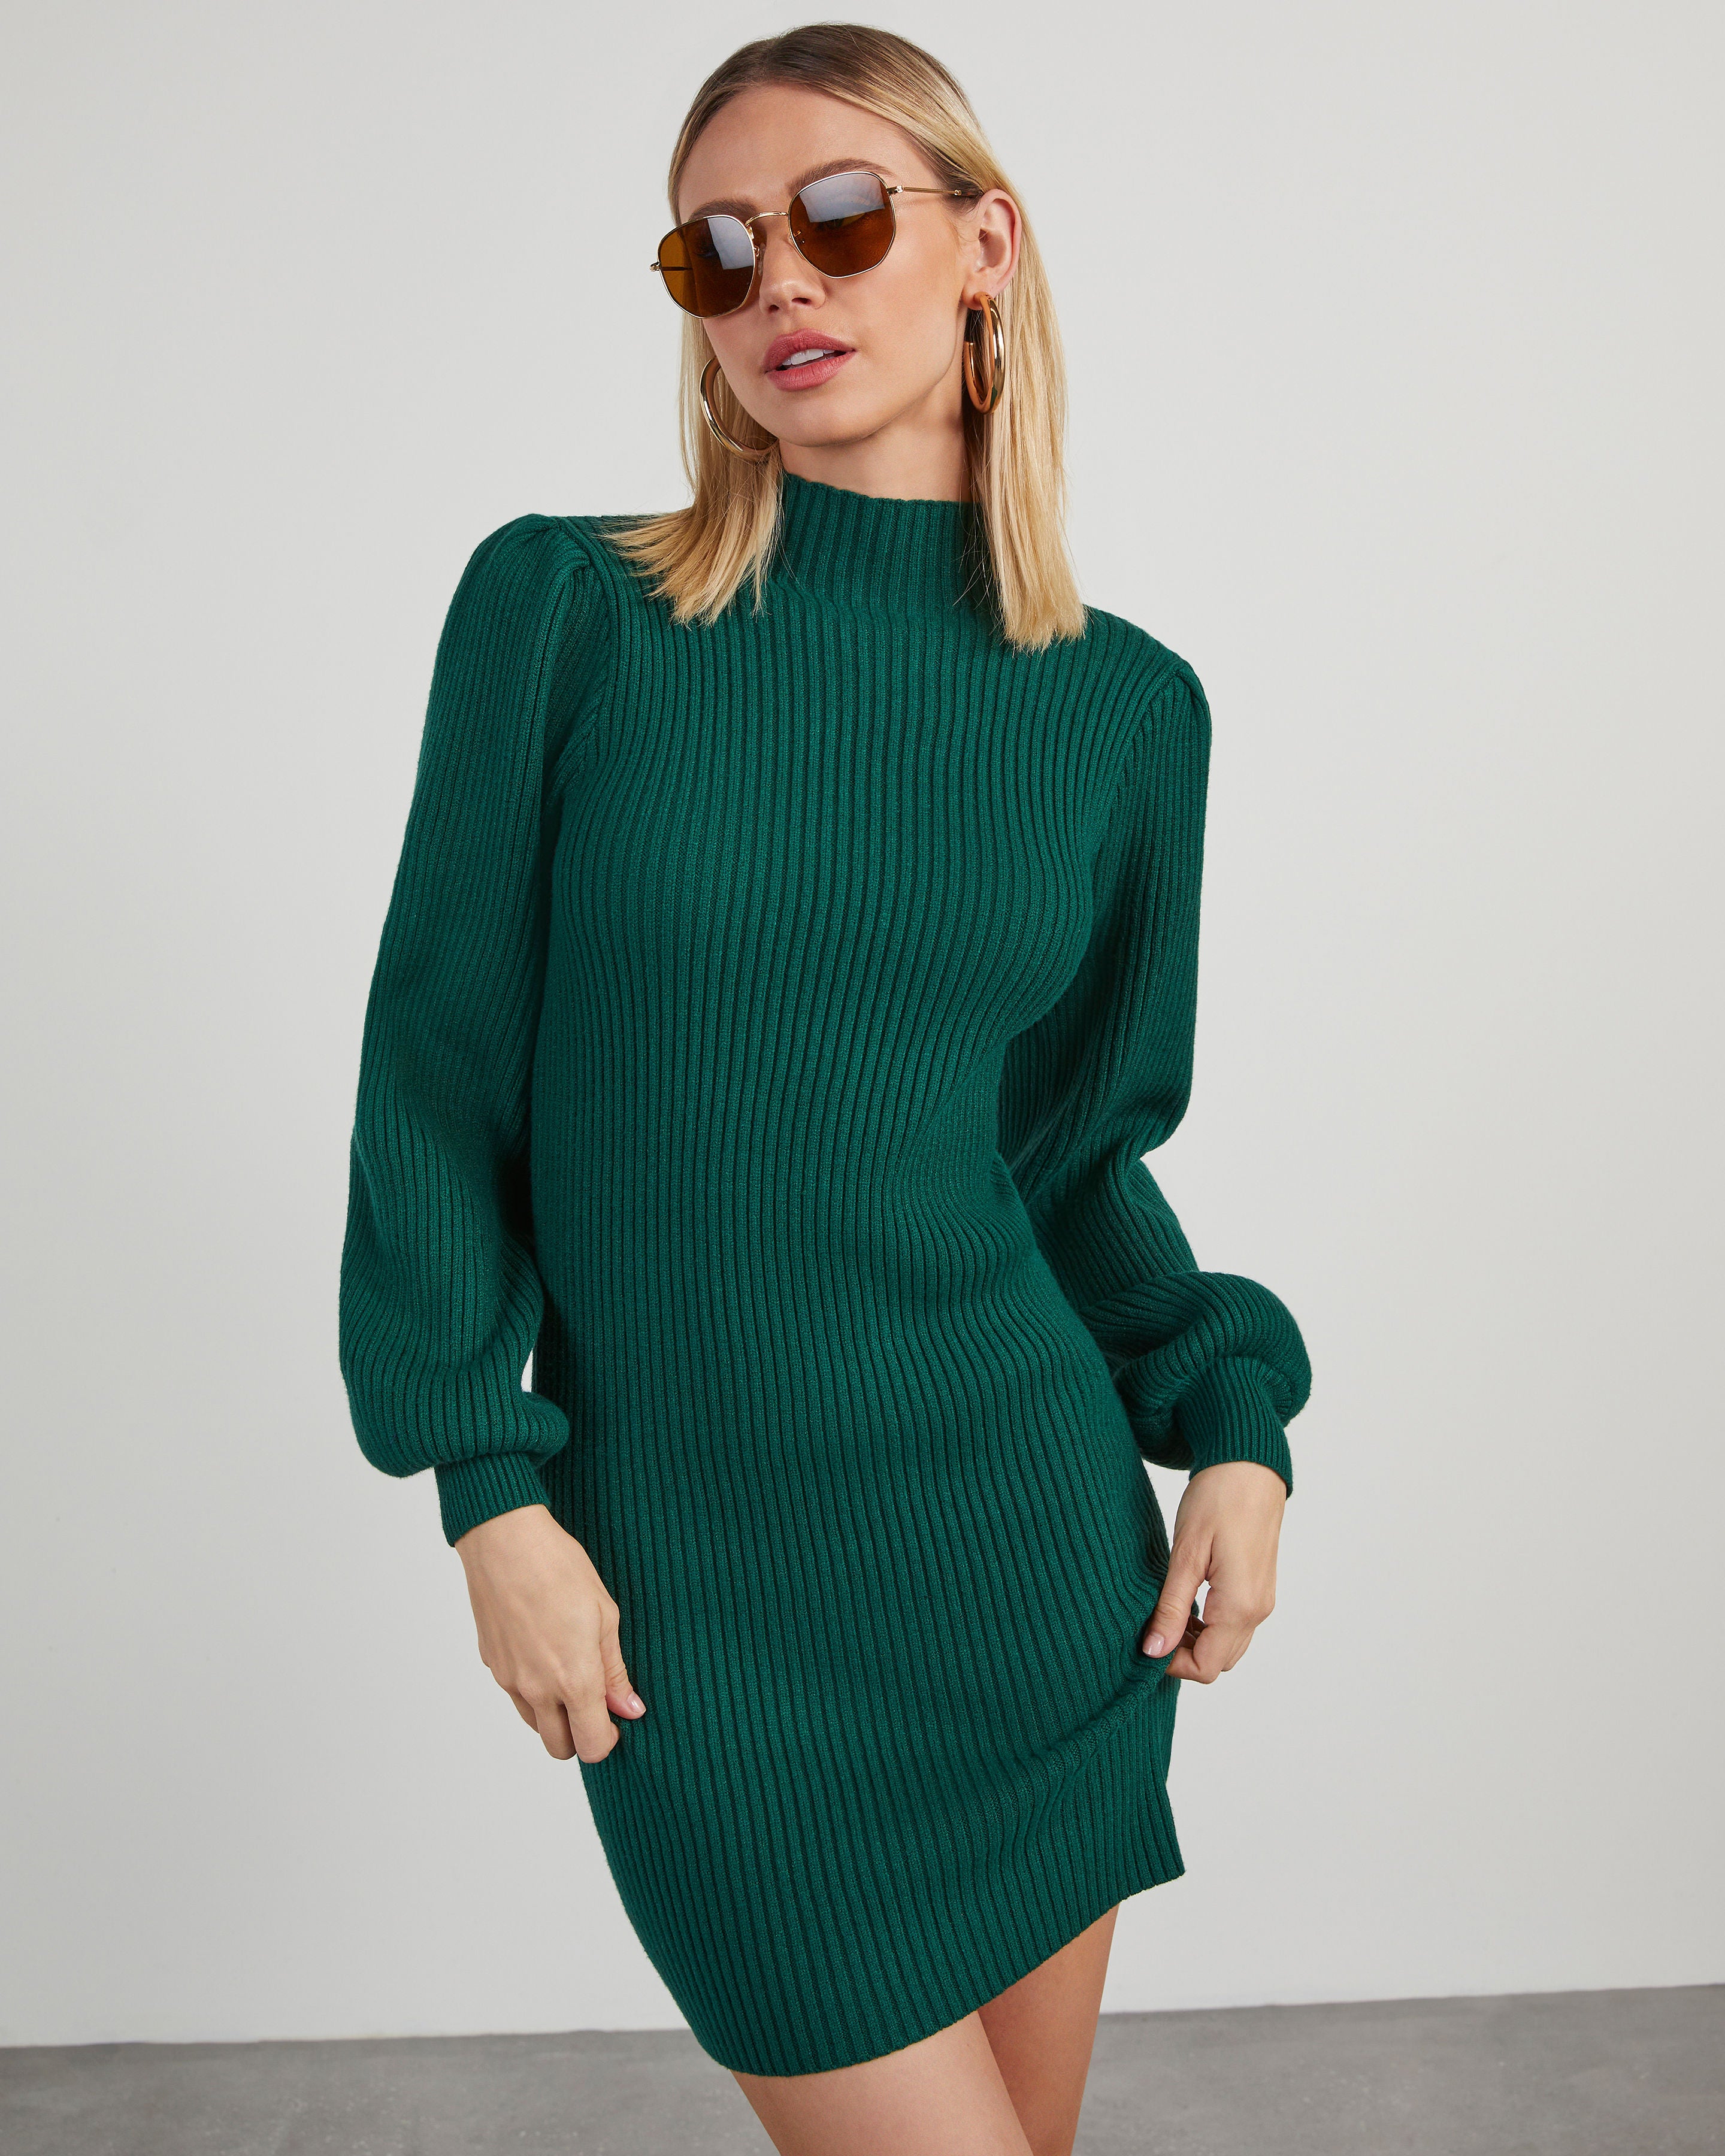 Scoop Me Away Sweater Dress (Green)- FINAL SALE